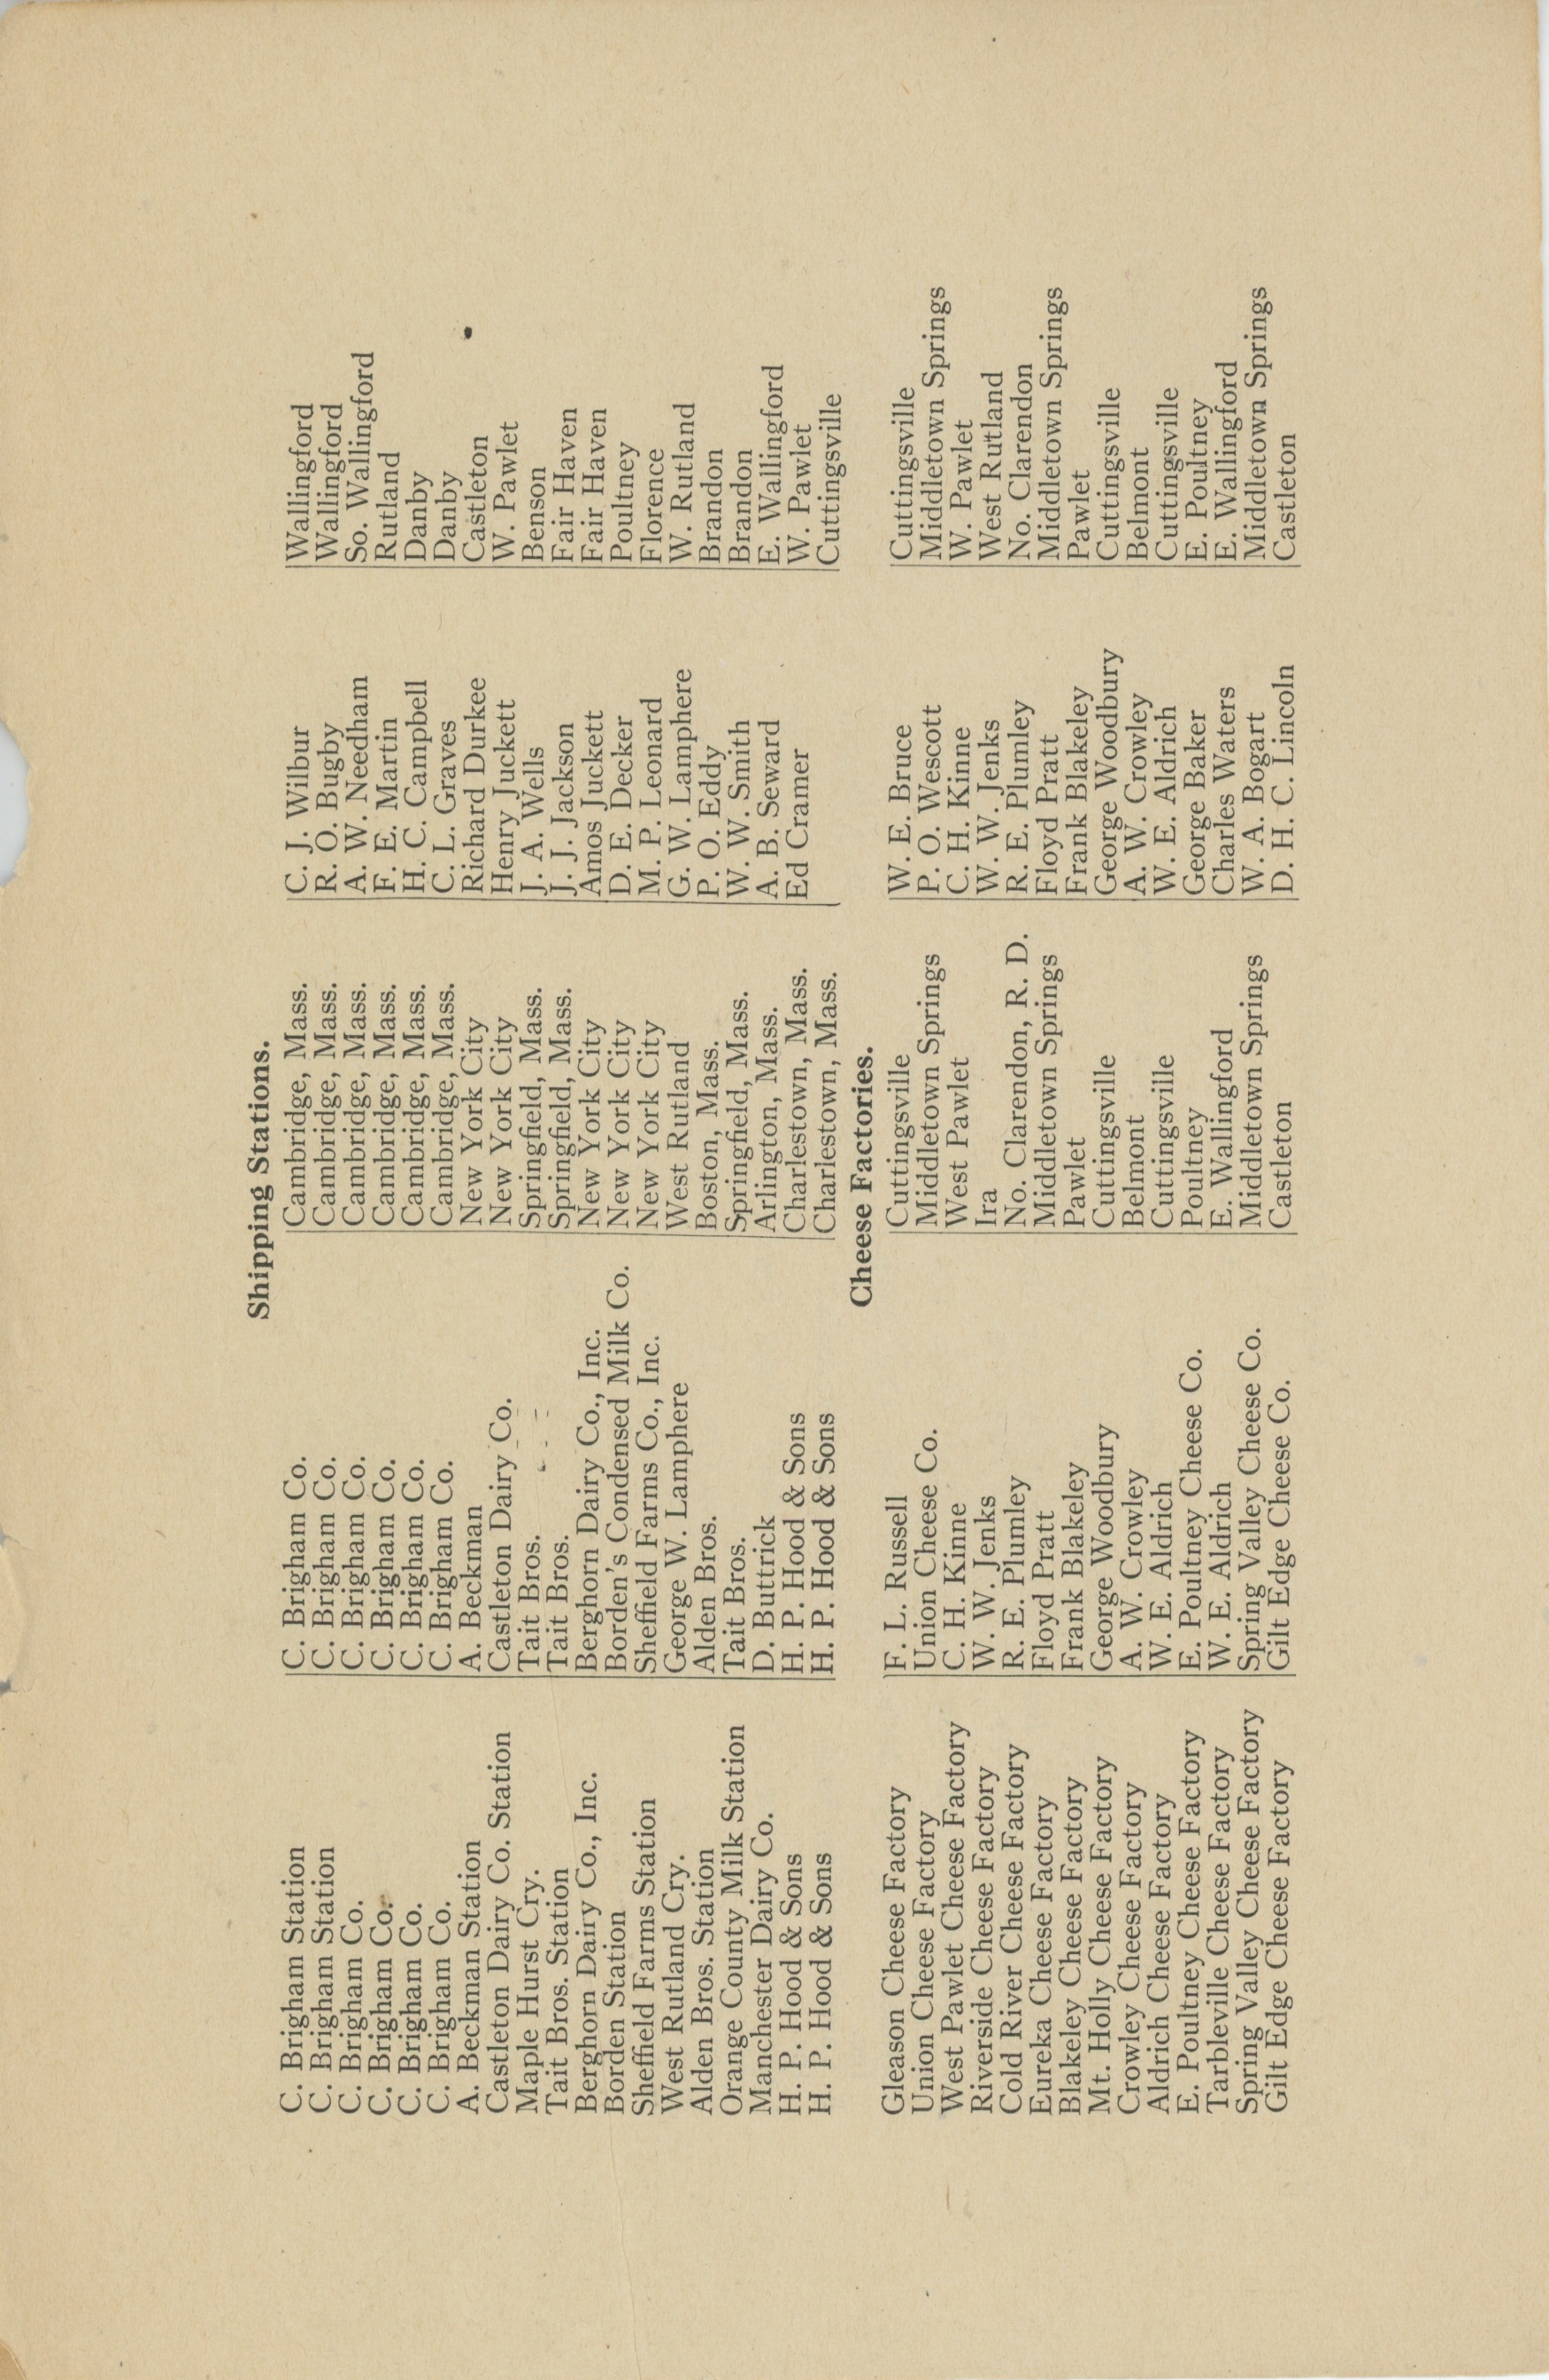 ced-1921-statedepartment-list of creameriespg8.jpeg